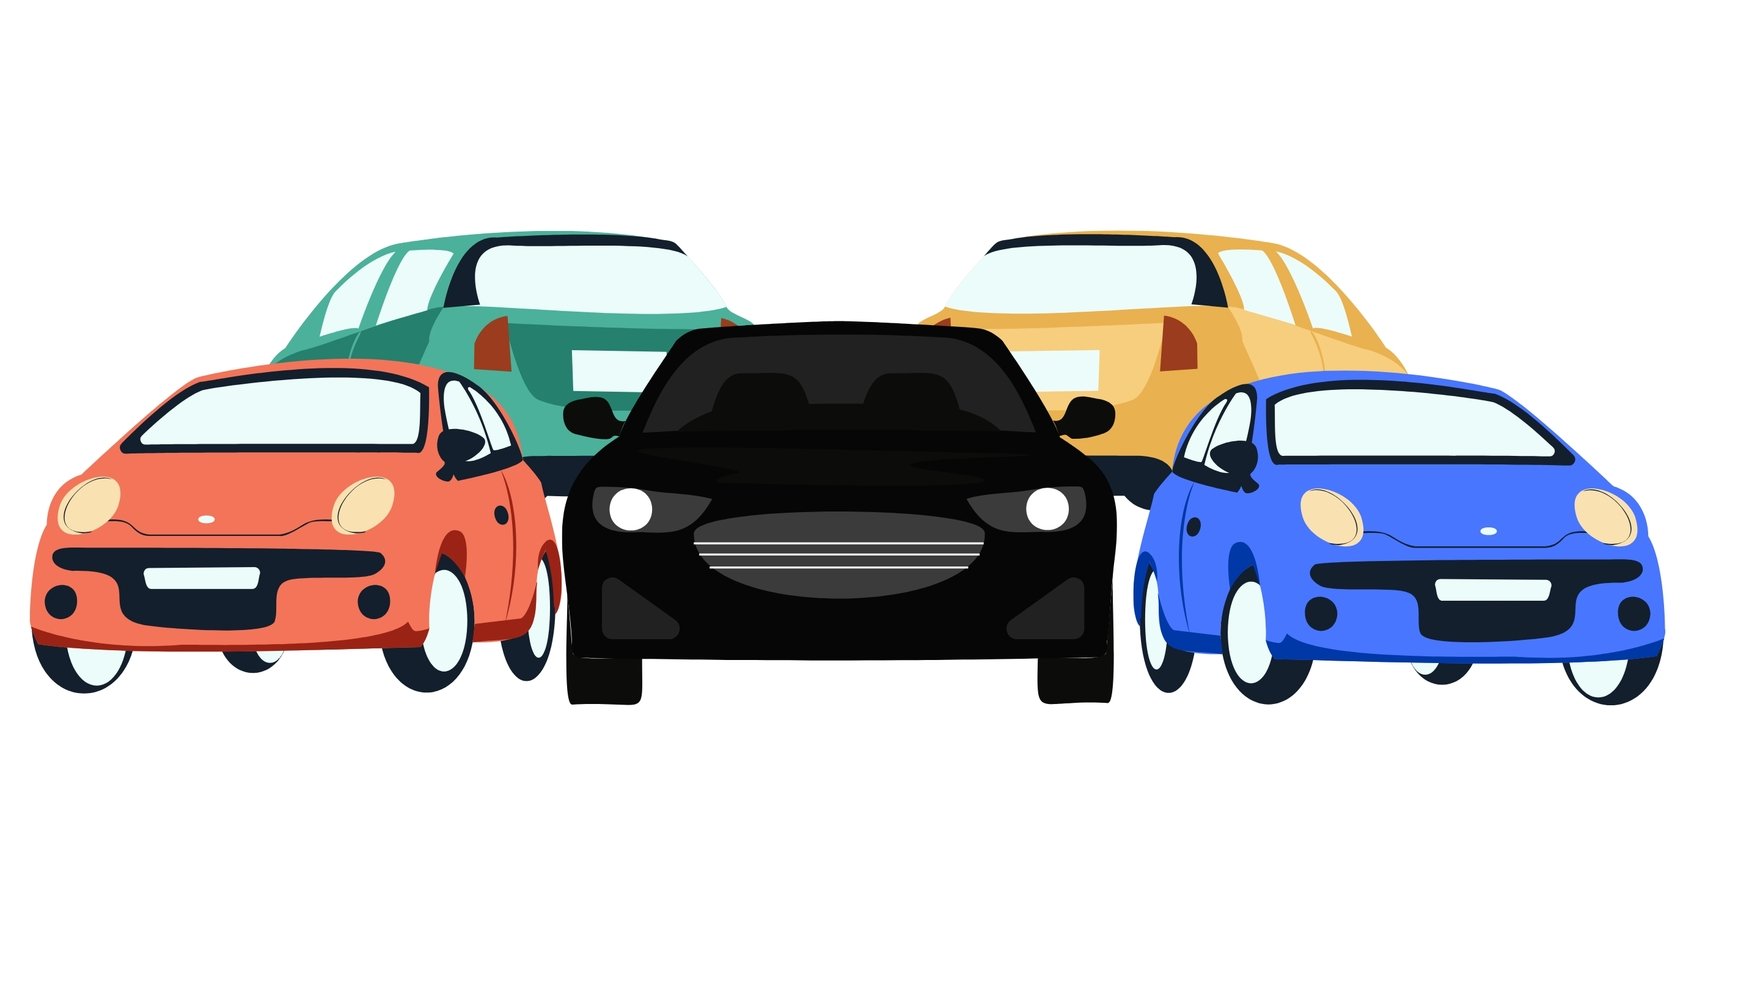 Free Cars White Background in Illustrator, EPS, SVG, JPG, PNG